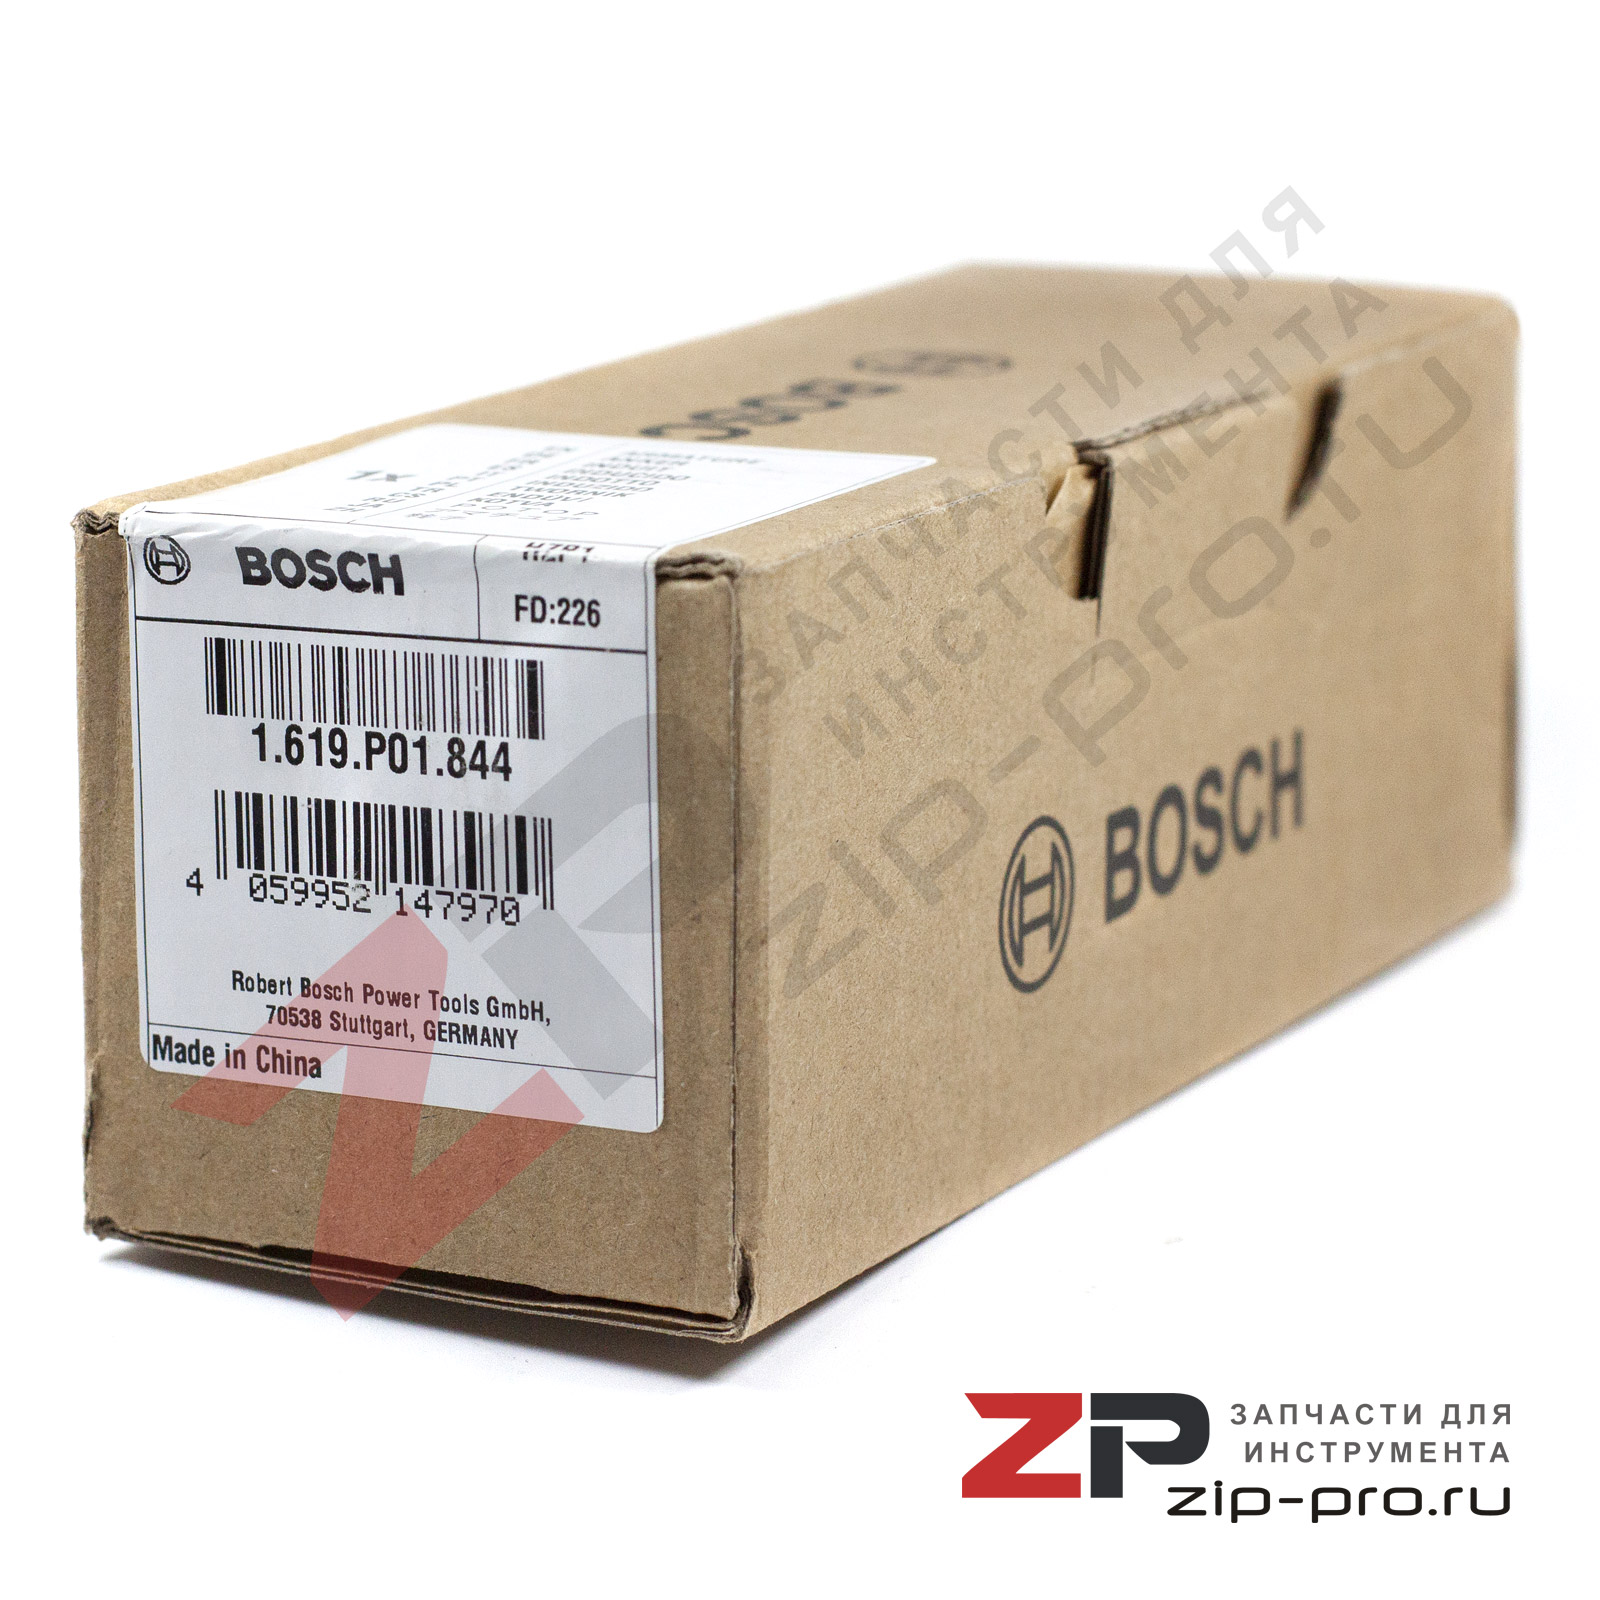 Редуктор 1619P01844 для УШМ Bosch фото 4